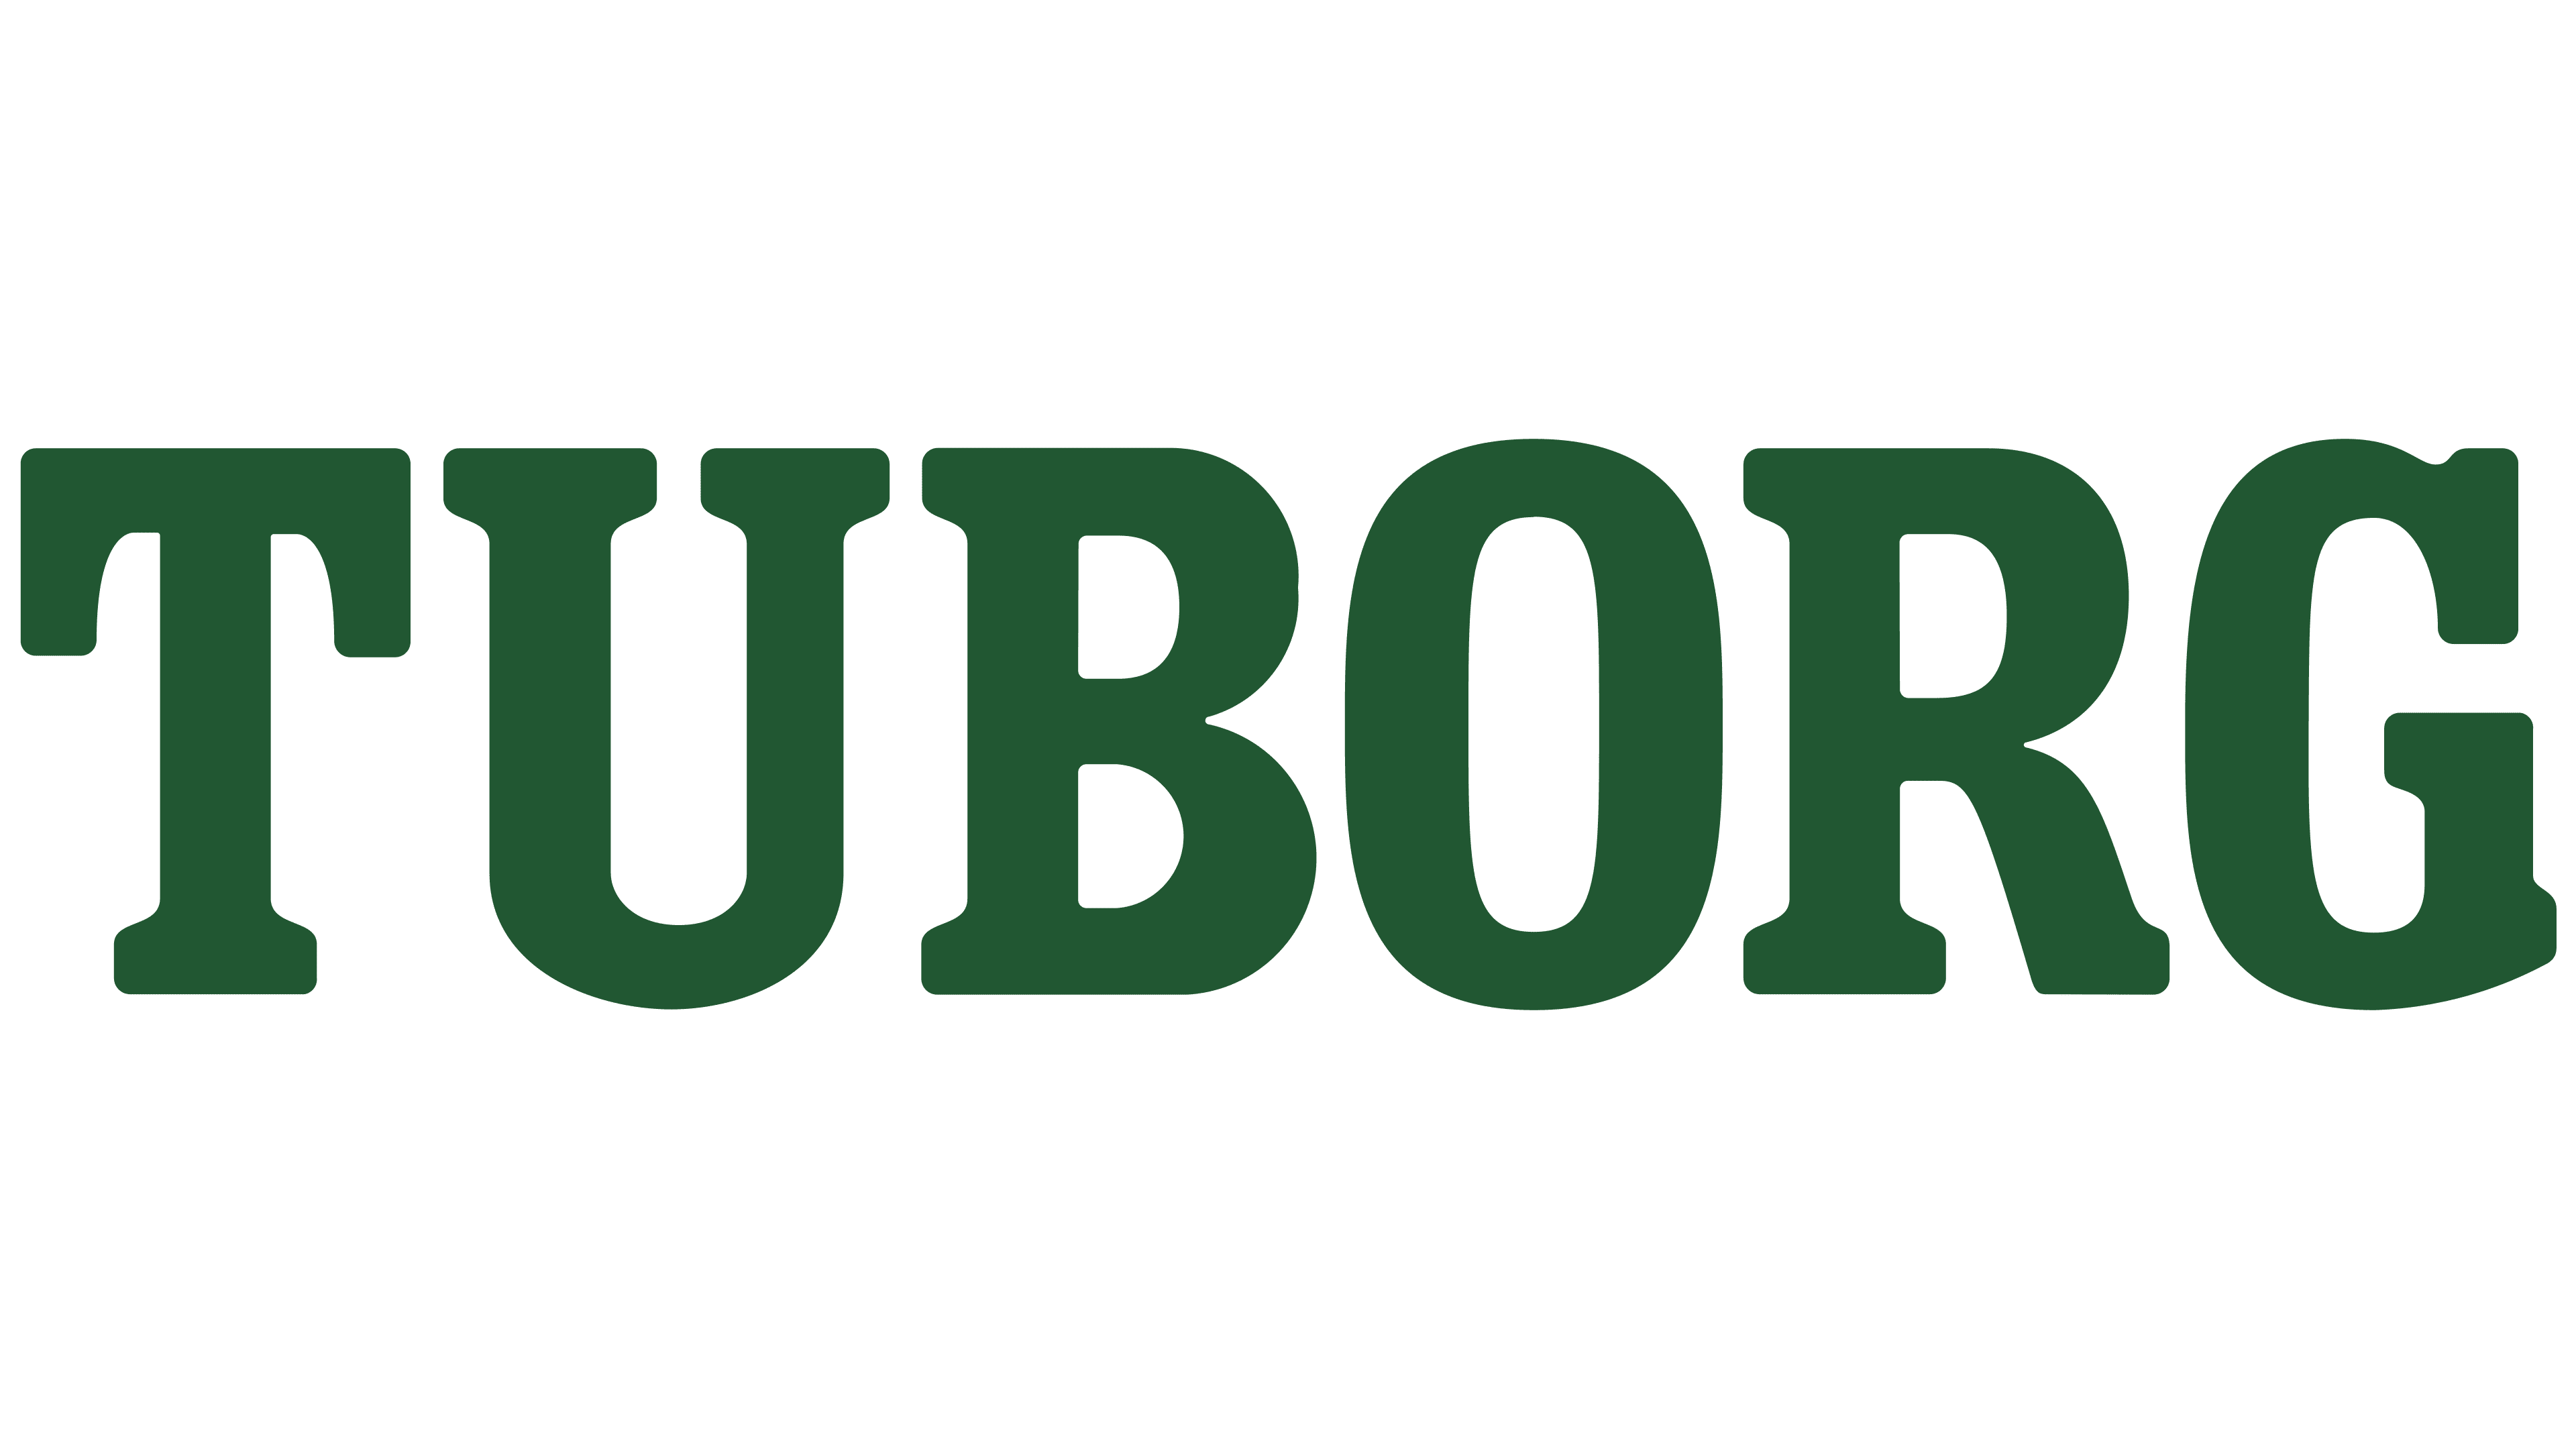 Tuborg Logo